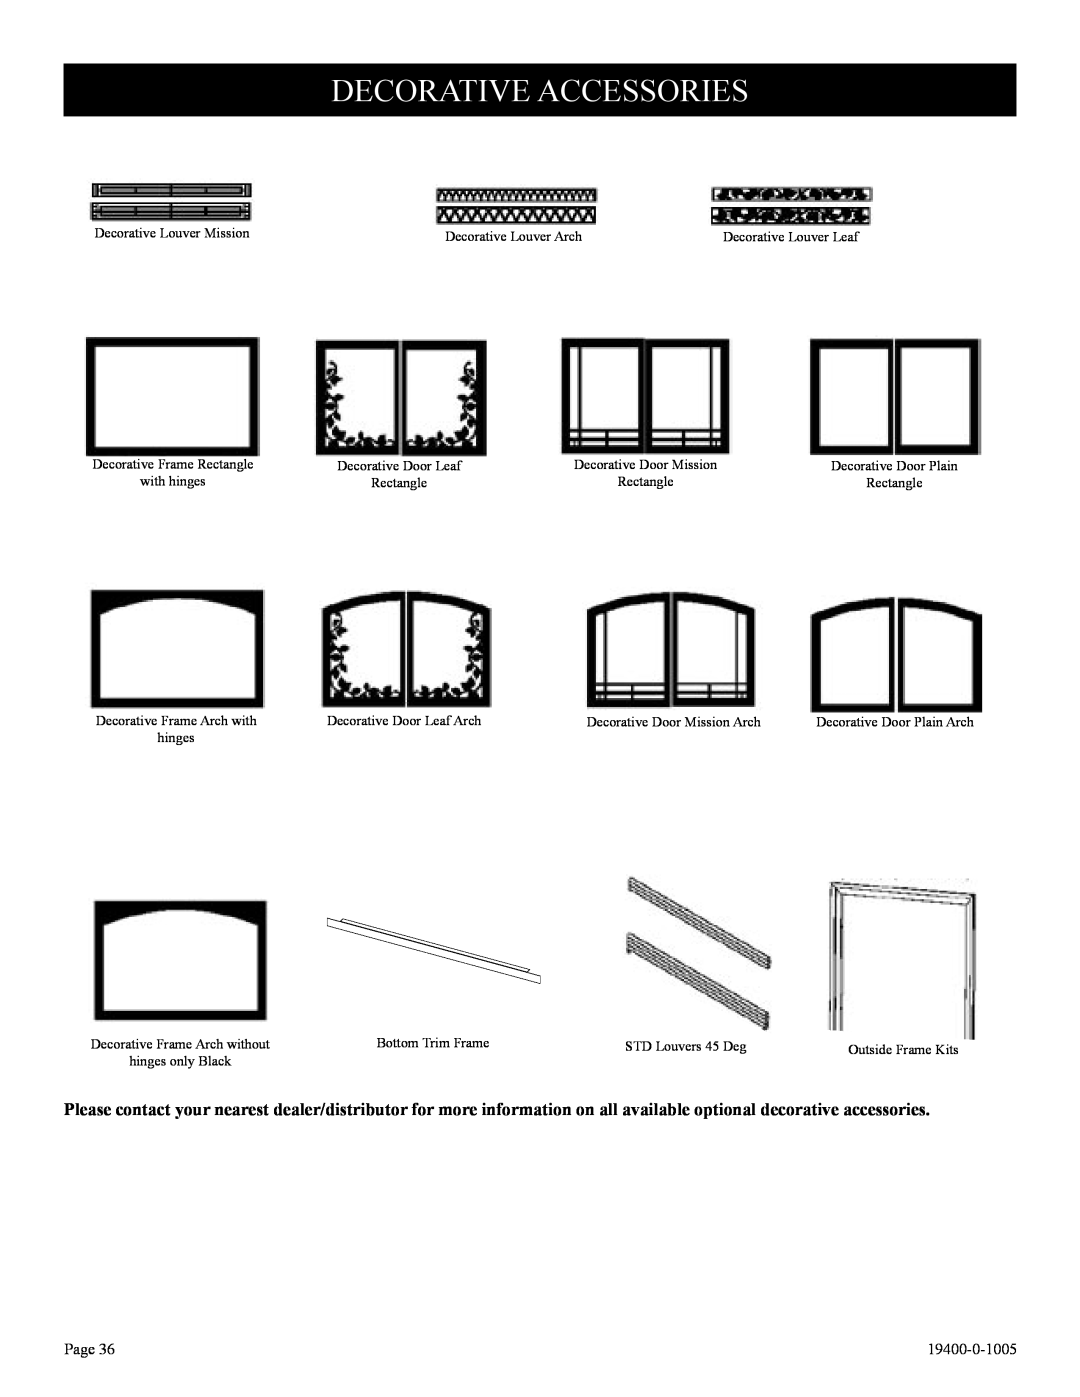 Vulcan-Hart BVP42FP52(F,L)N-1 Decorative Accessories, Page, 19400-0-1005, Decorative Louver Mission, Bottom Trim Frame 